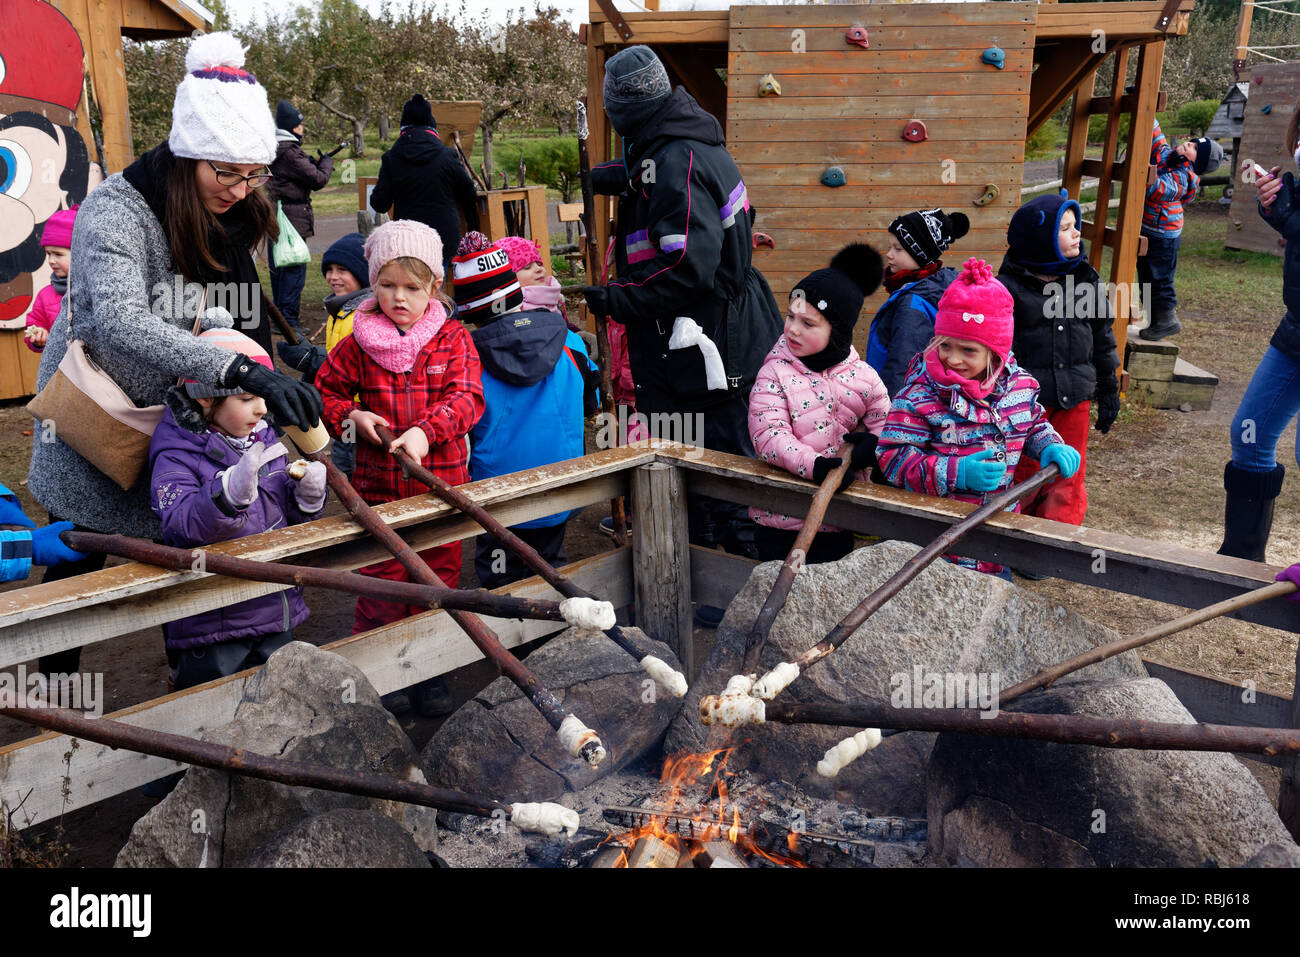 Children cooking bannock campfire bread on sticks over an open fire Stock Photo